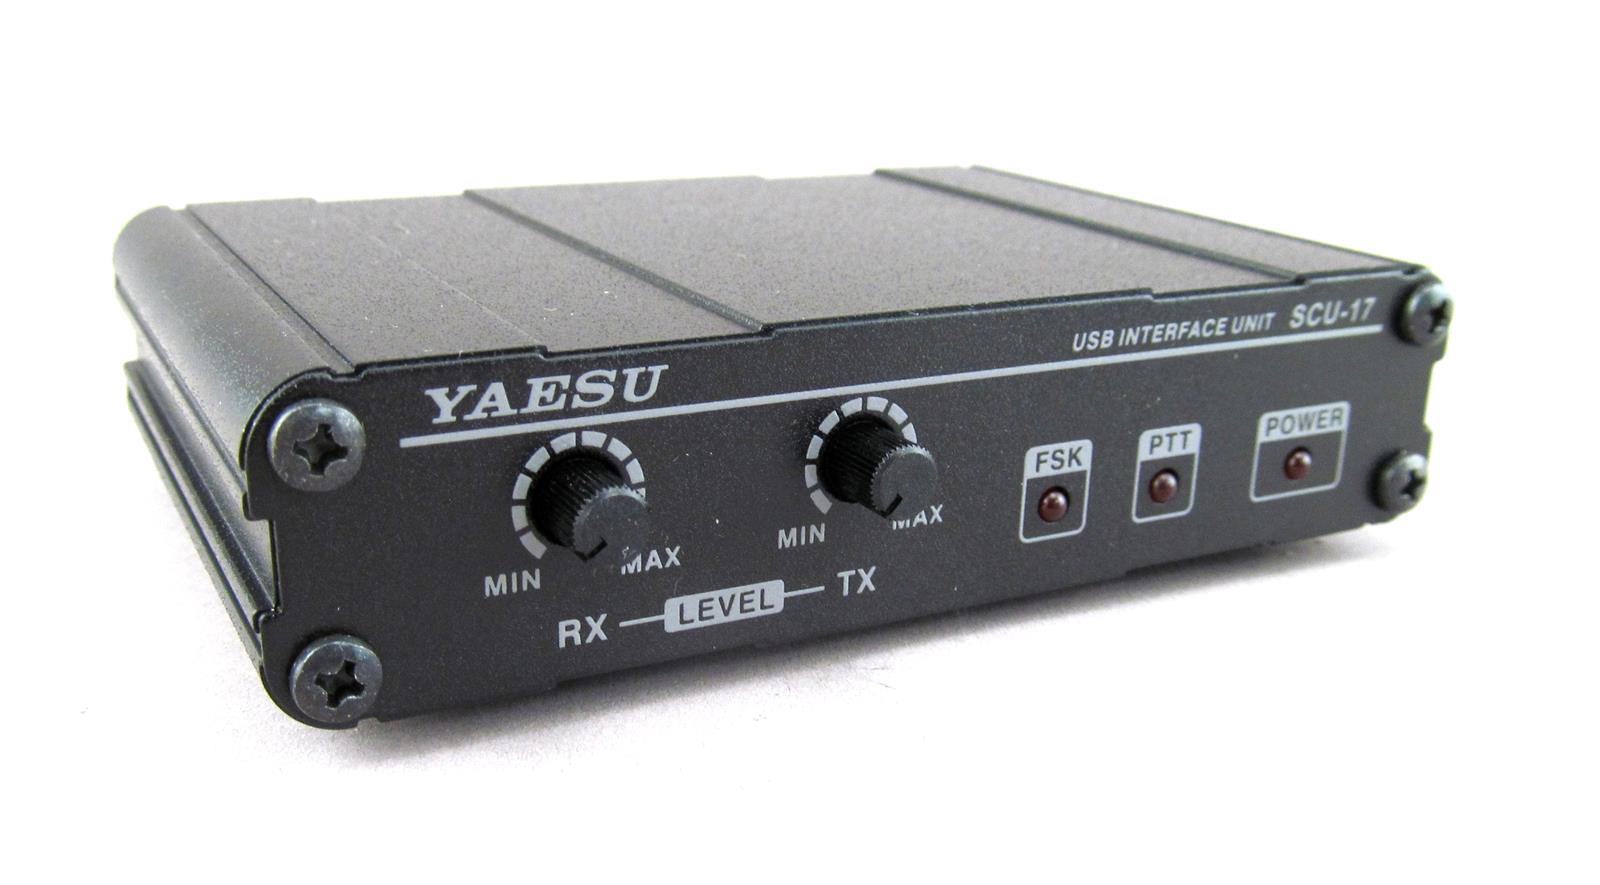 Yaesu SCU-17 Yaesu SCU-17 USB Interface Units | DX Engineering